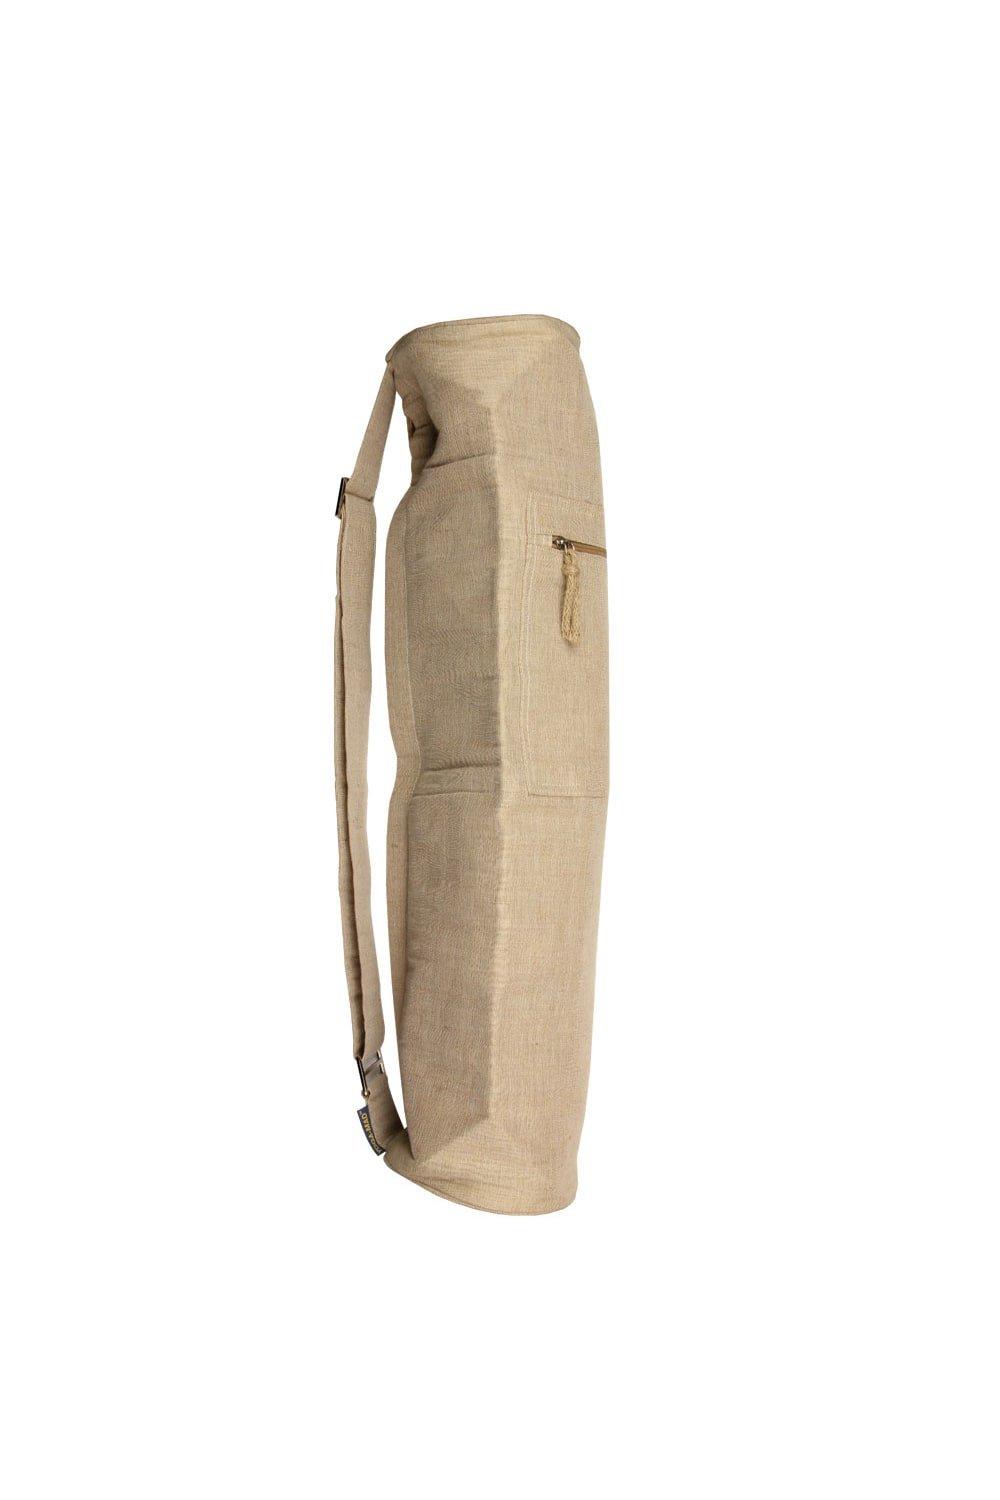 Yoga-Mad  Jute Yoga Mat Bag (One Size) (Natural)